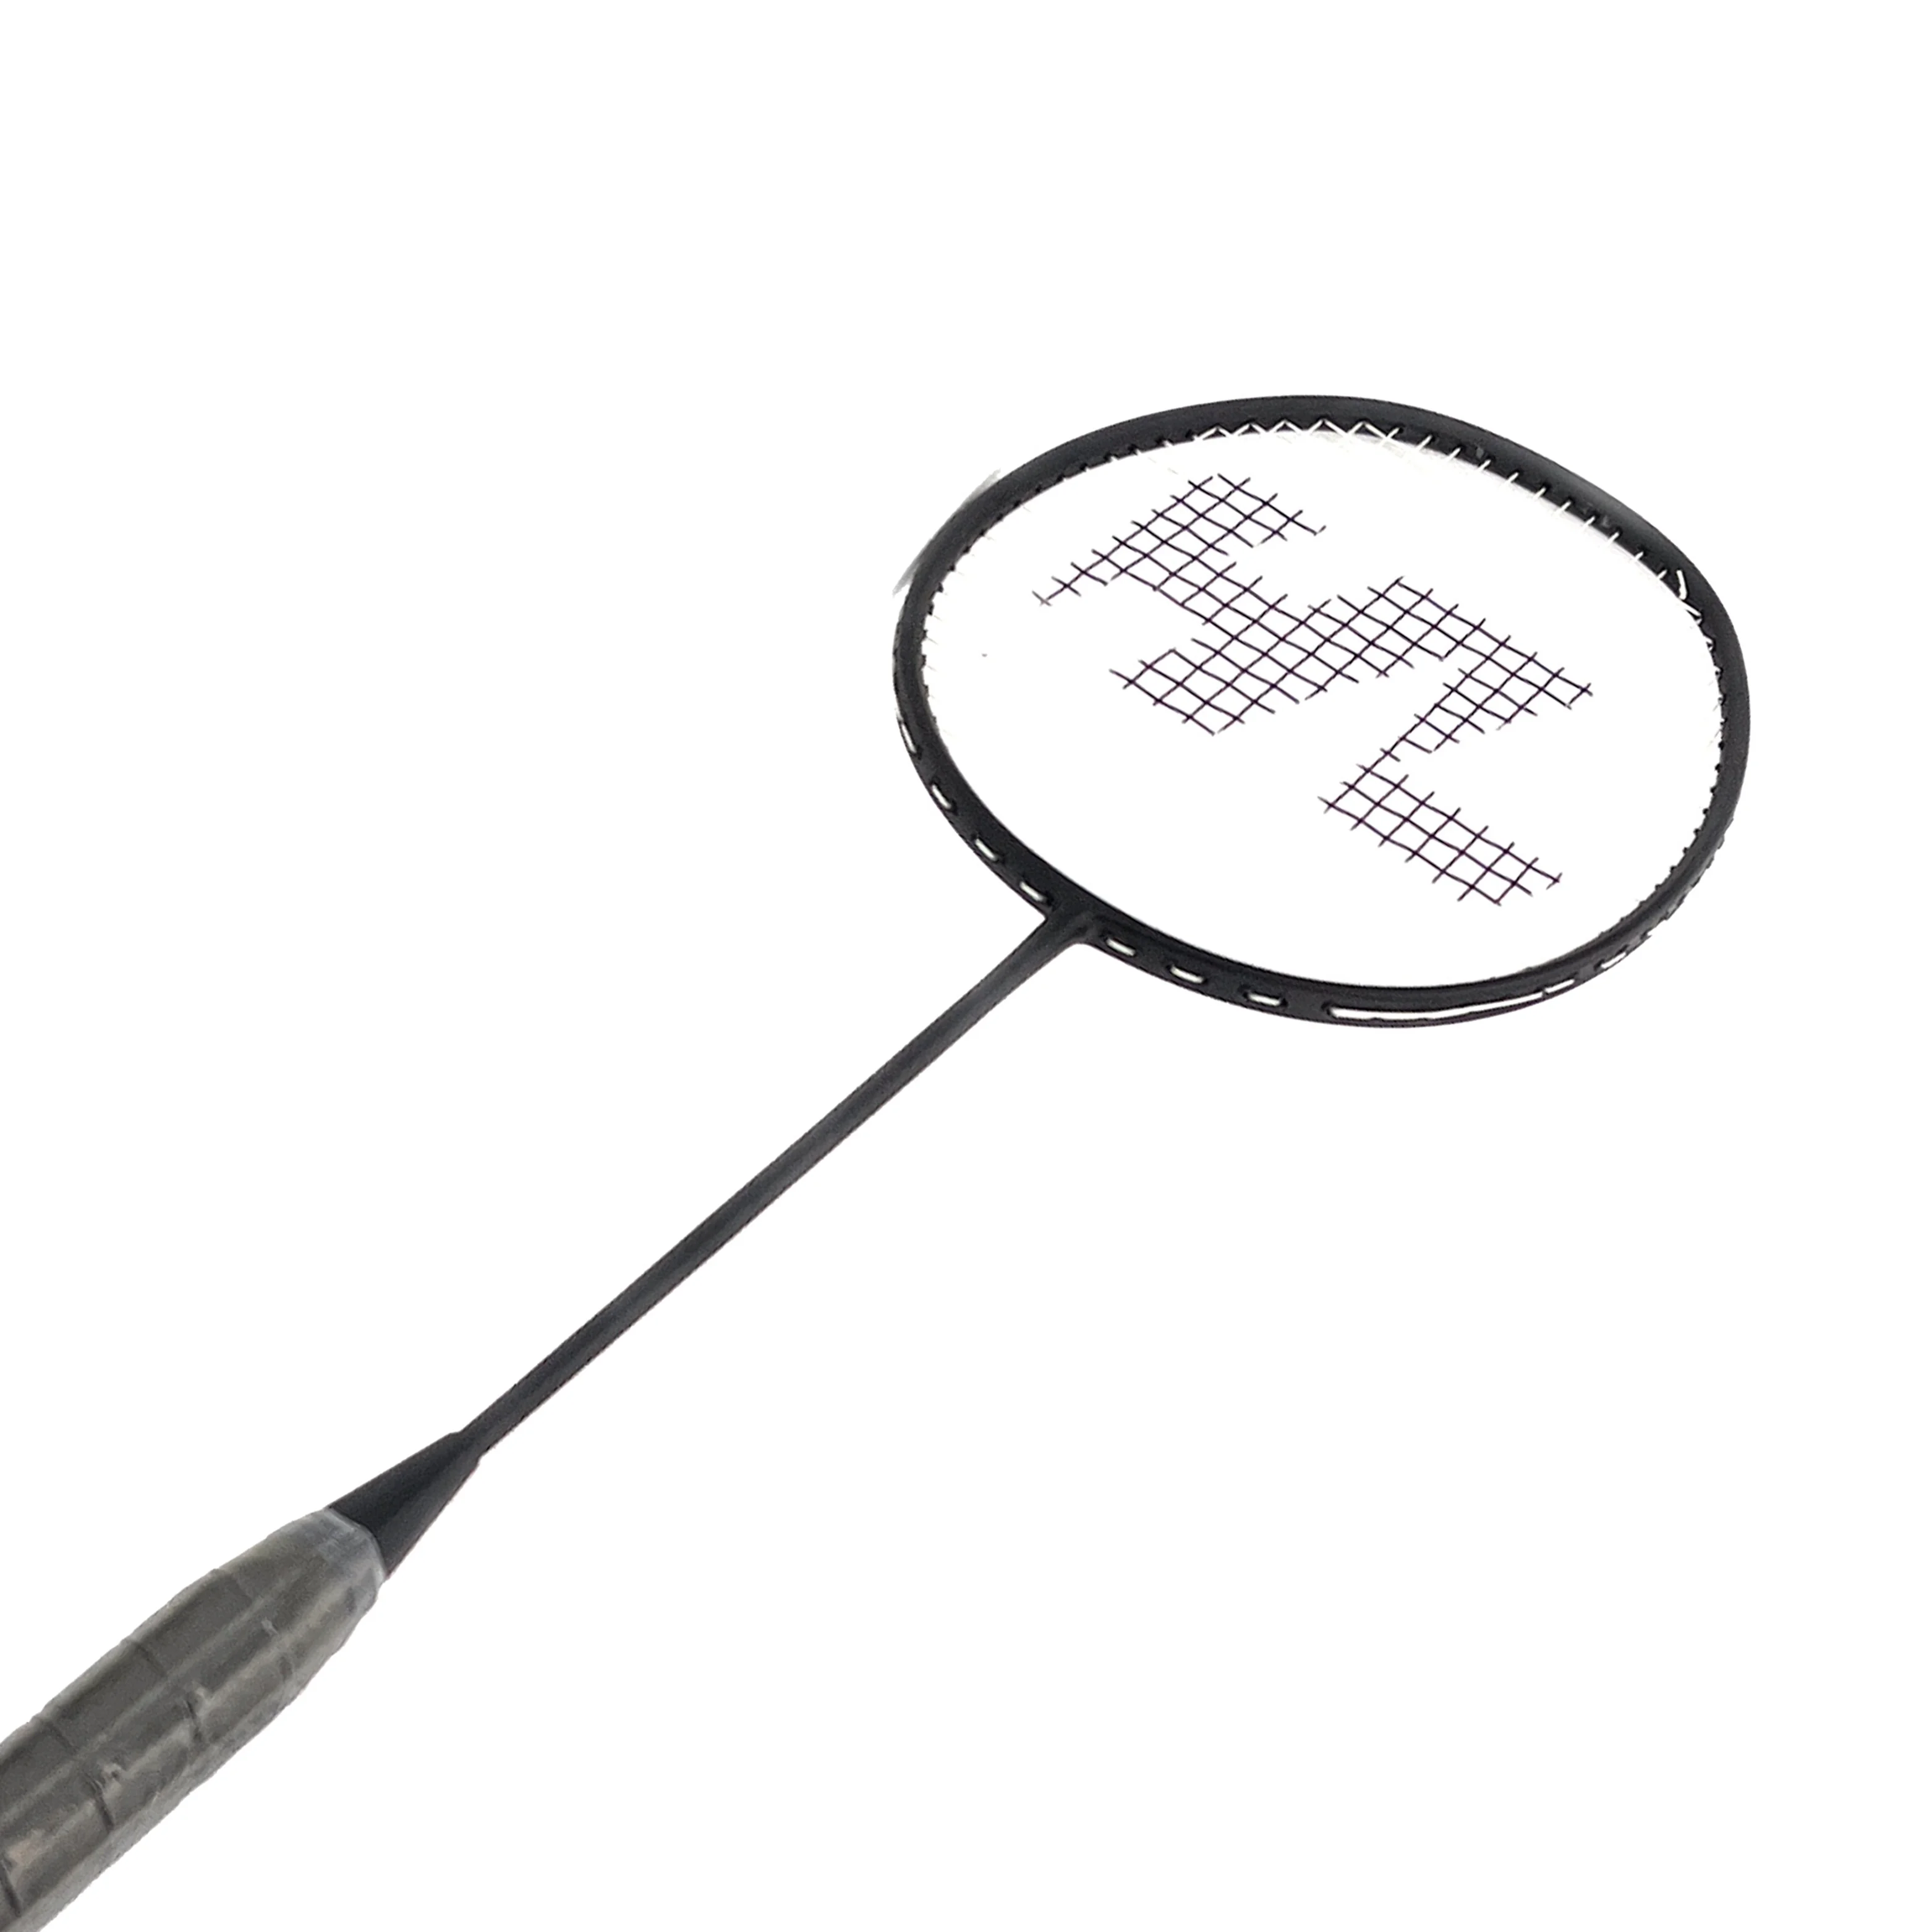 

Professional High quality Light bag badminton carbon fiber racket racquet